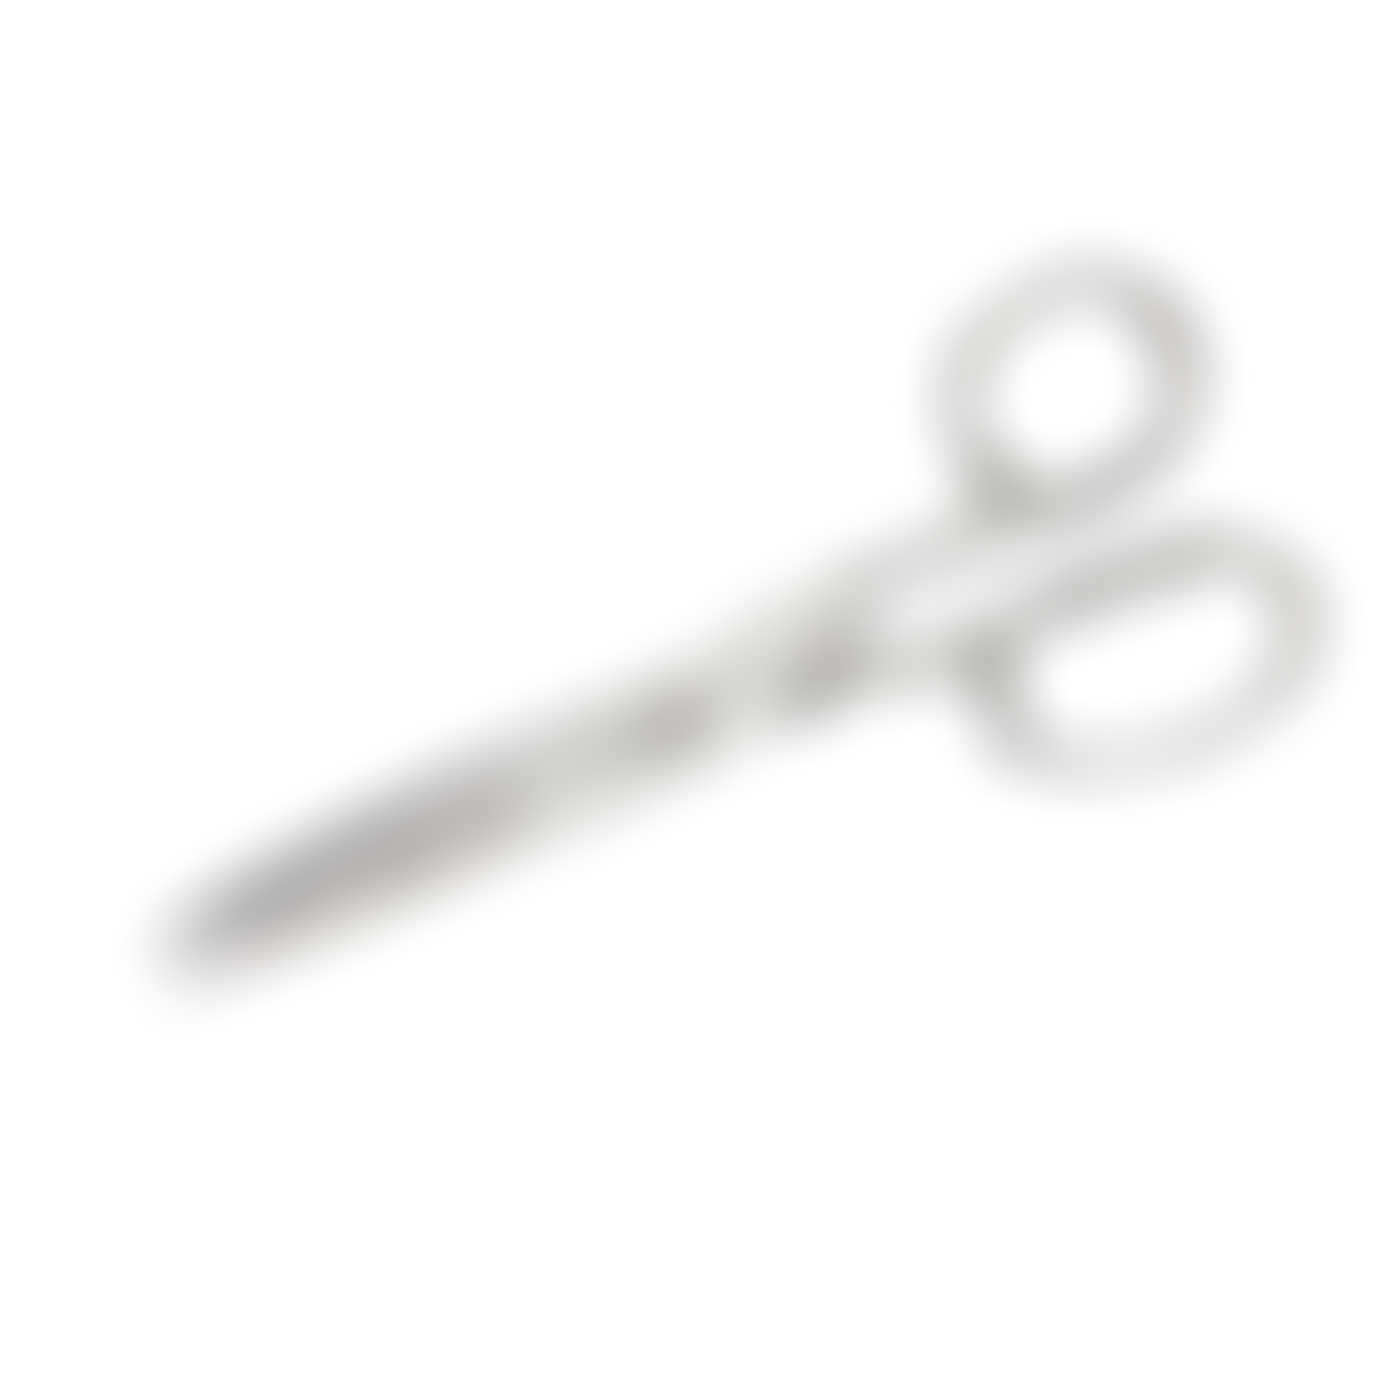 NatSumeBasics Mint Green Scissors 6.5'' Office Scissors All Purpose  Scissors Professional Tailor Dressmaker Fabric Shears for school and  home(Mint